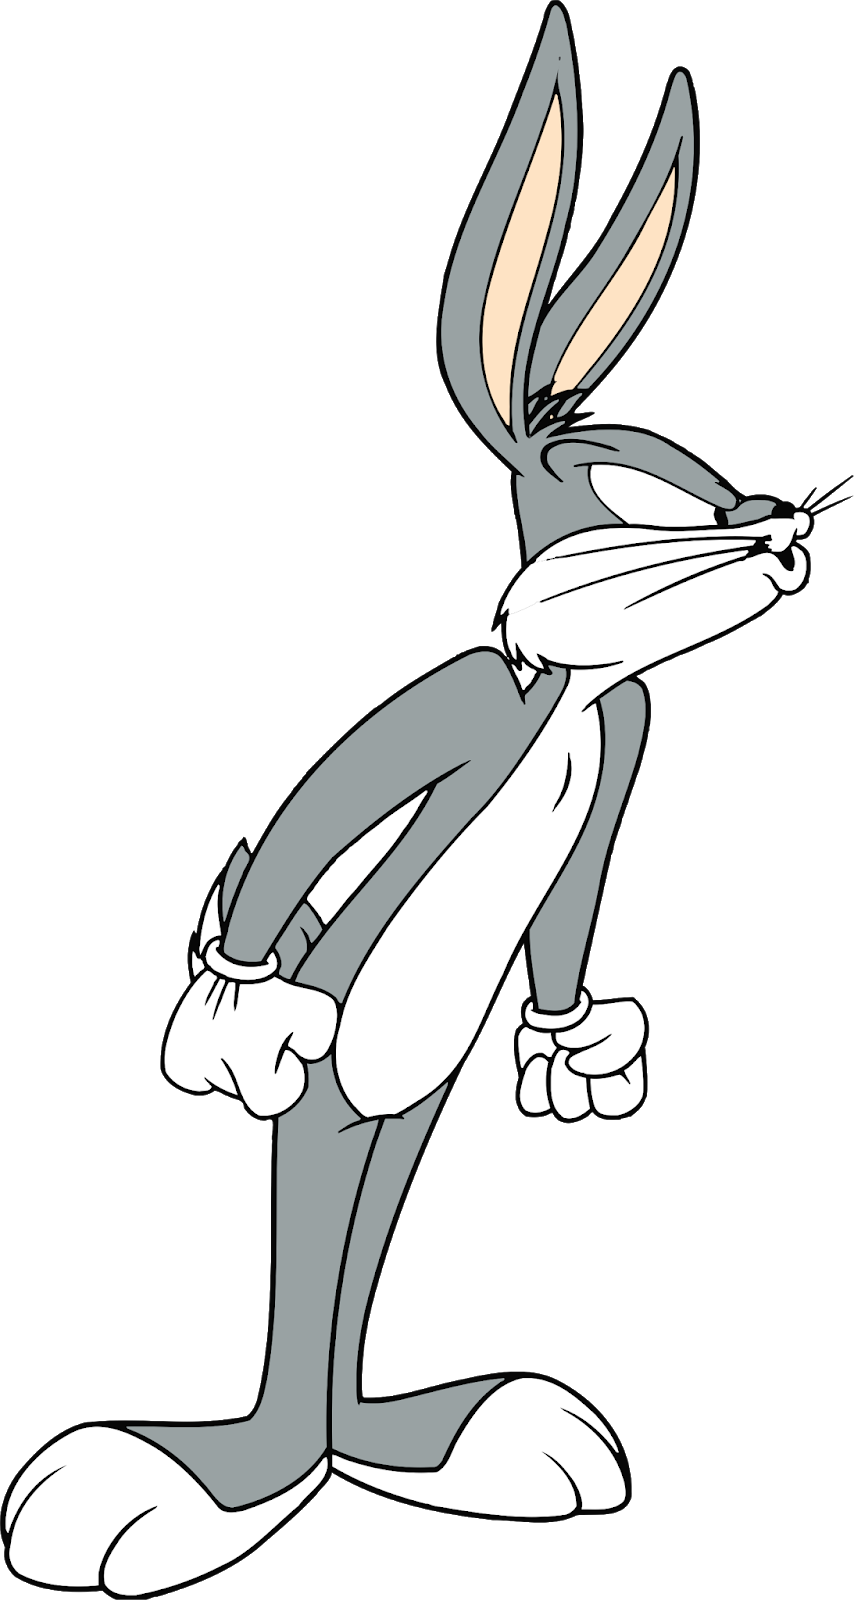 Cartoon Bugs Bunny Free Download Image PNG Image